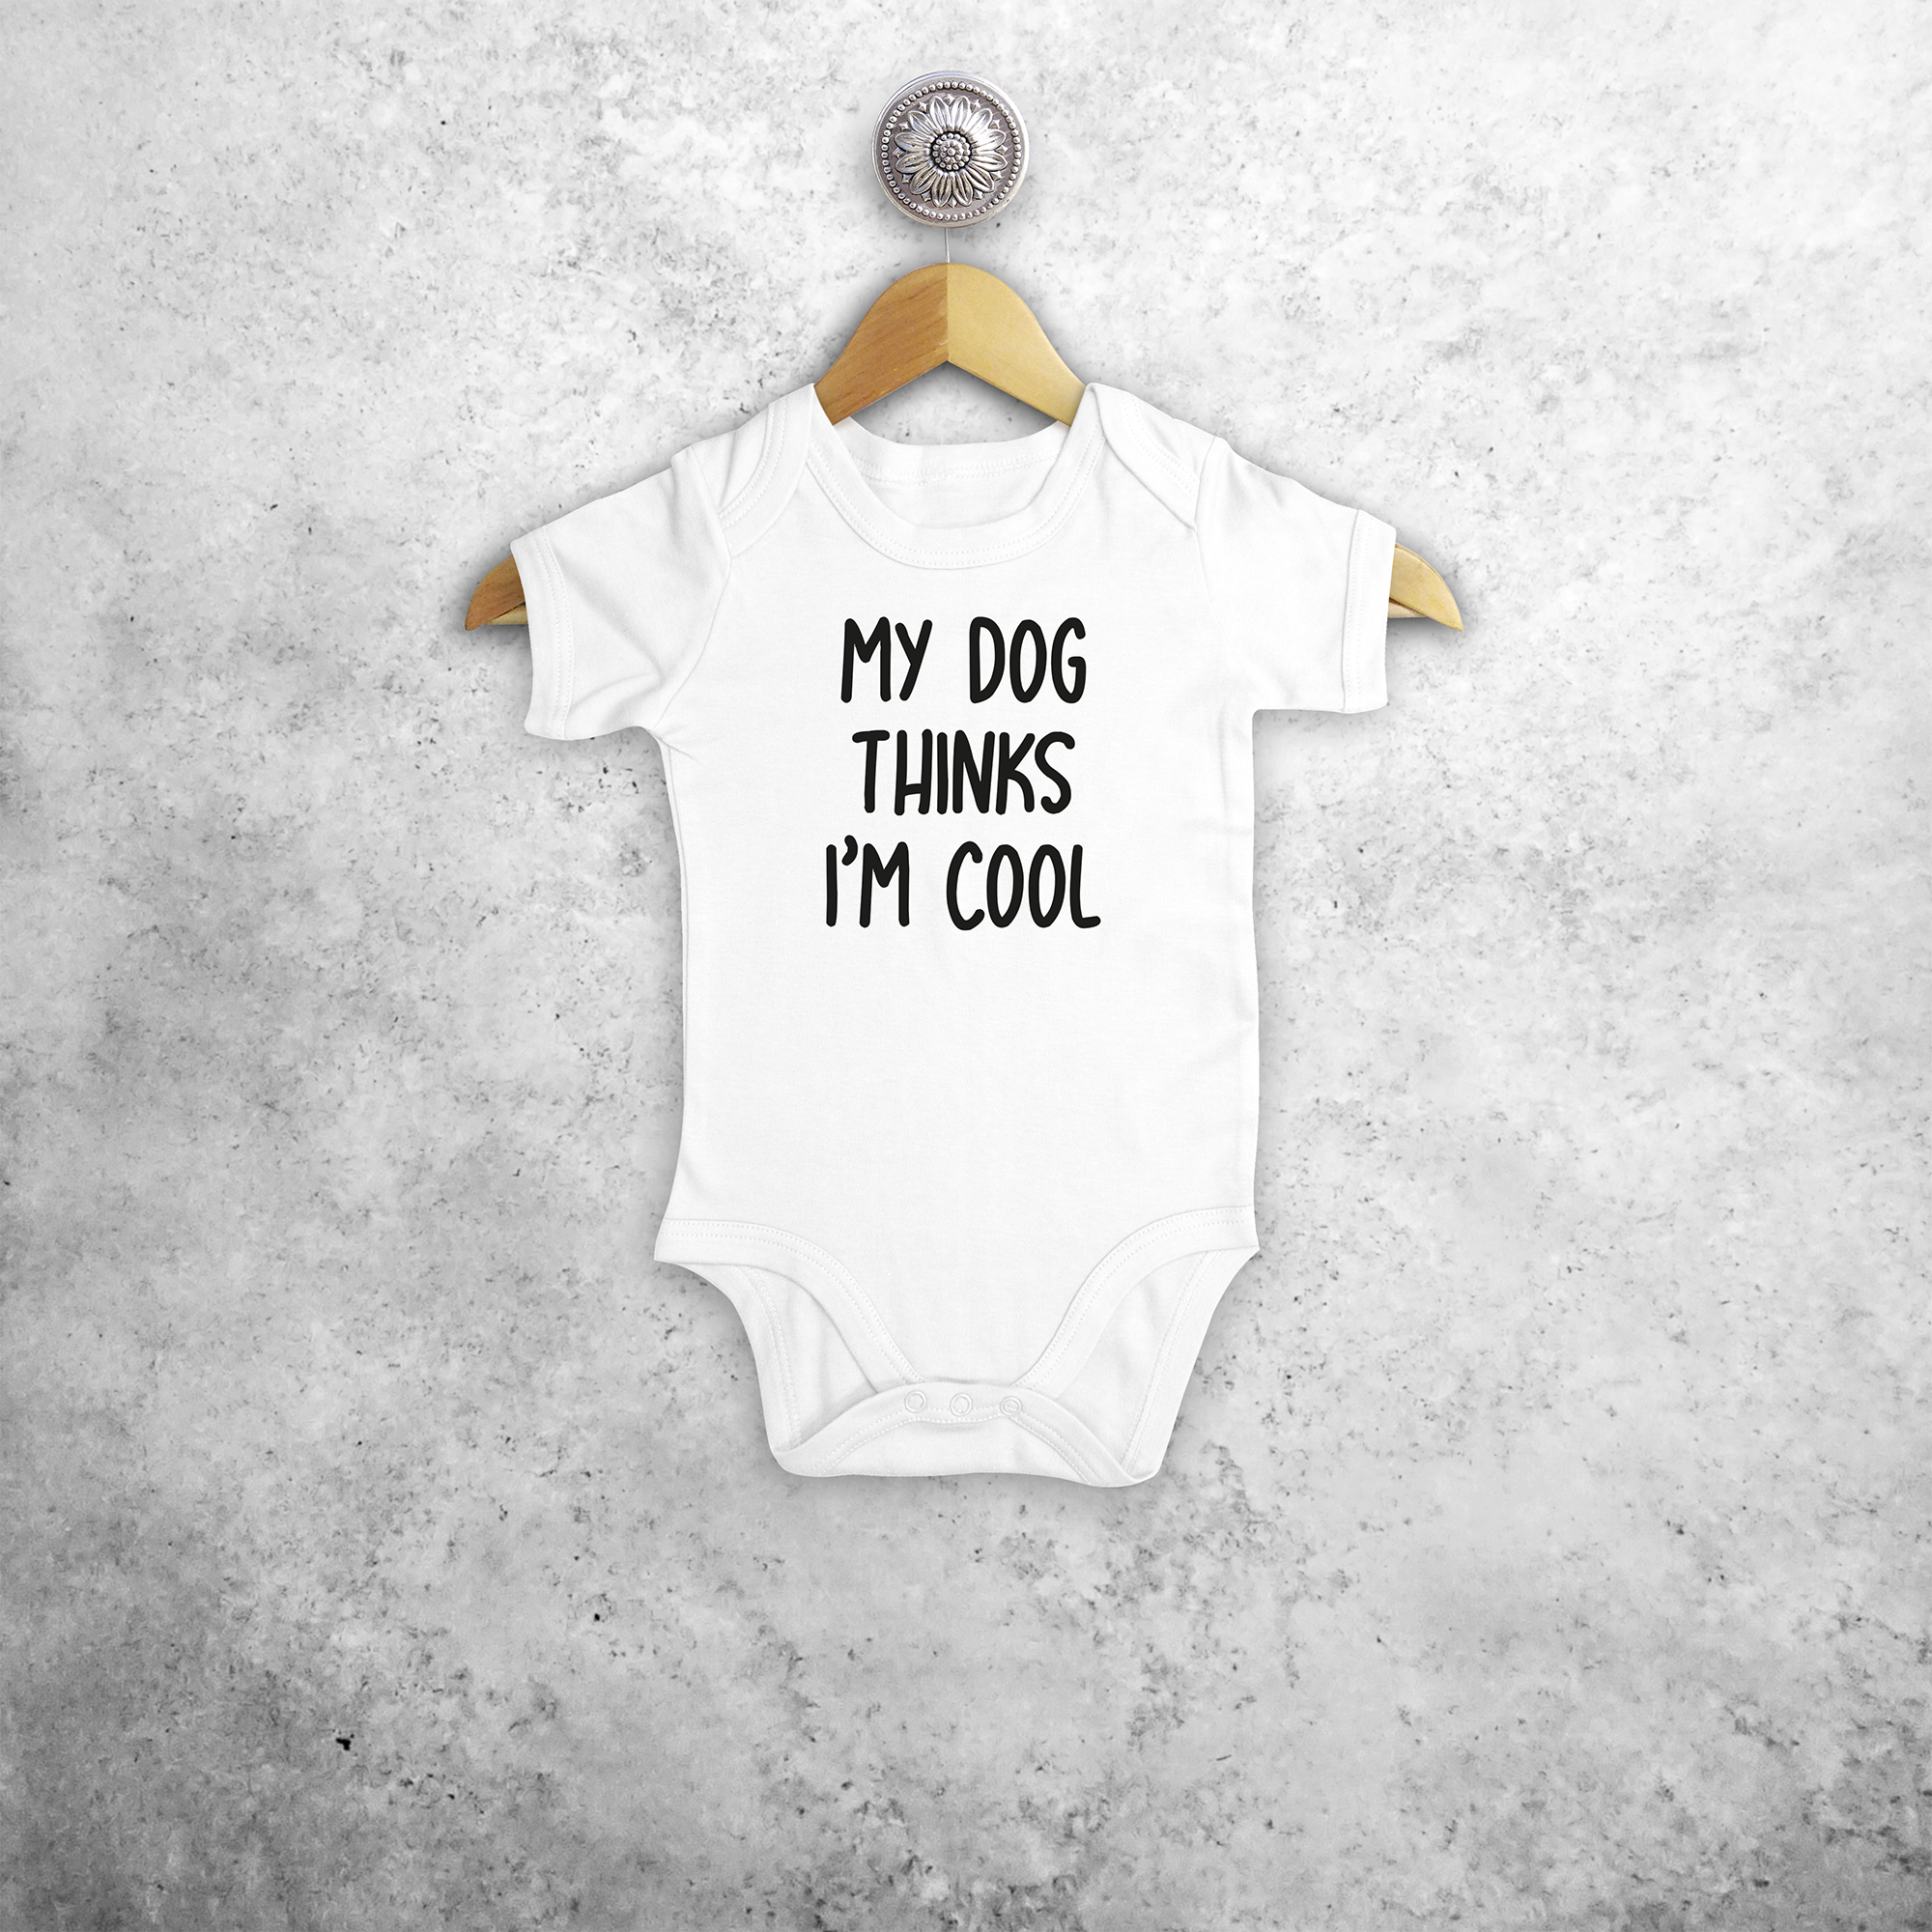 'My dog thinks I'm cool' baby kruippakje met korte mouwen